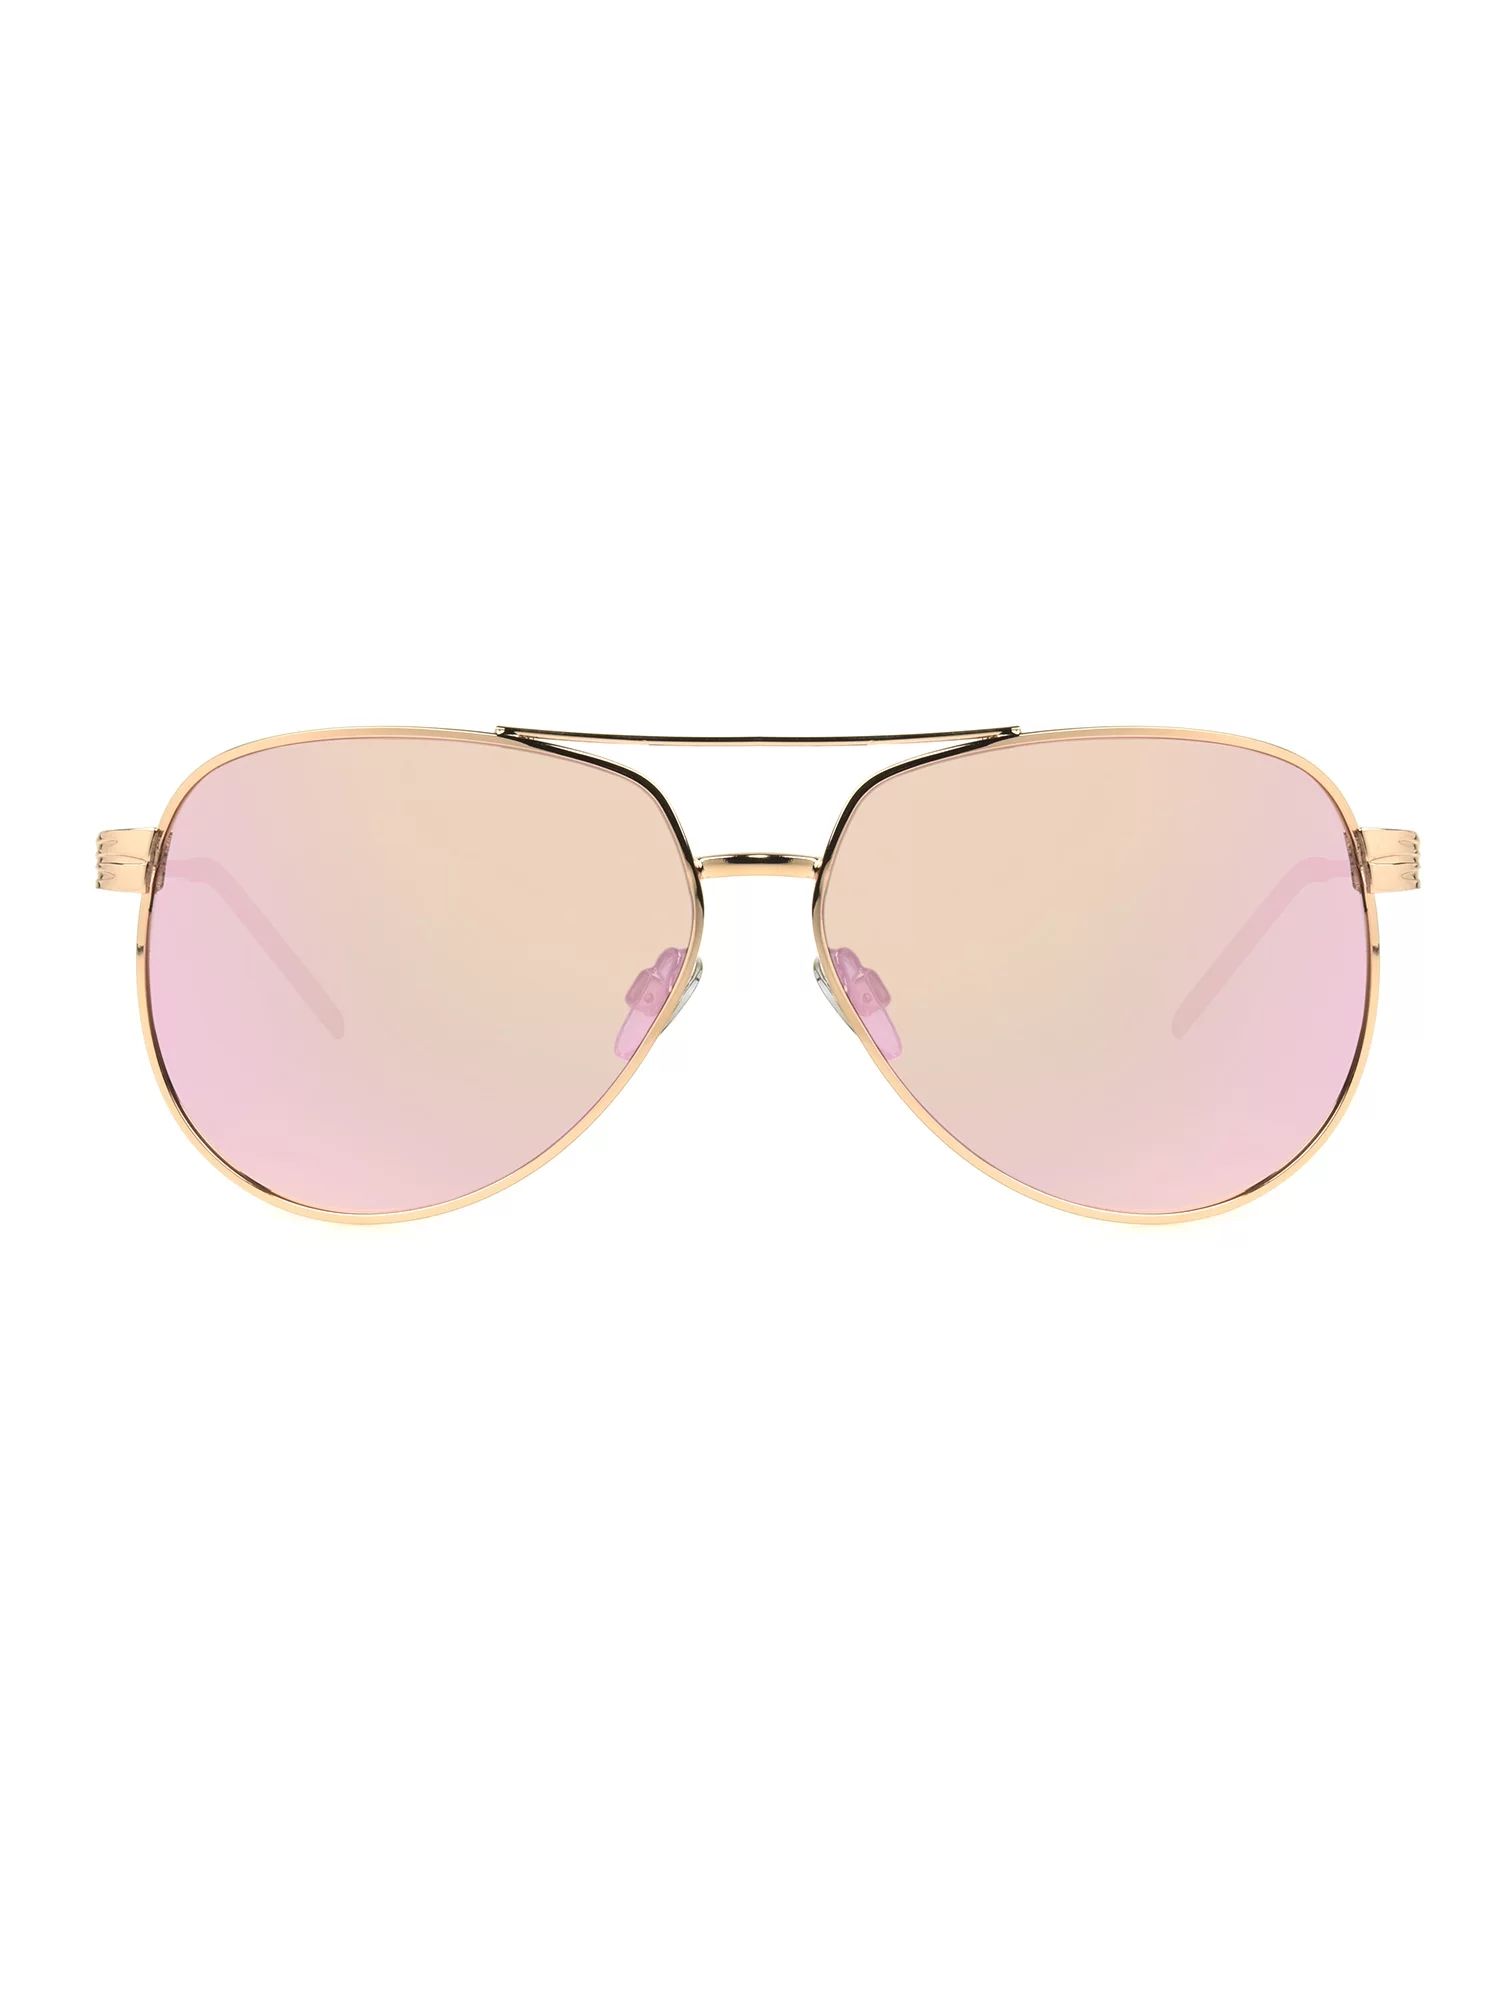 Foster Grant Women's Aviator Everyday Sunglasses Rose Gold | Walmart (US)